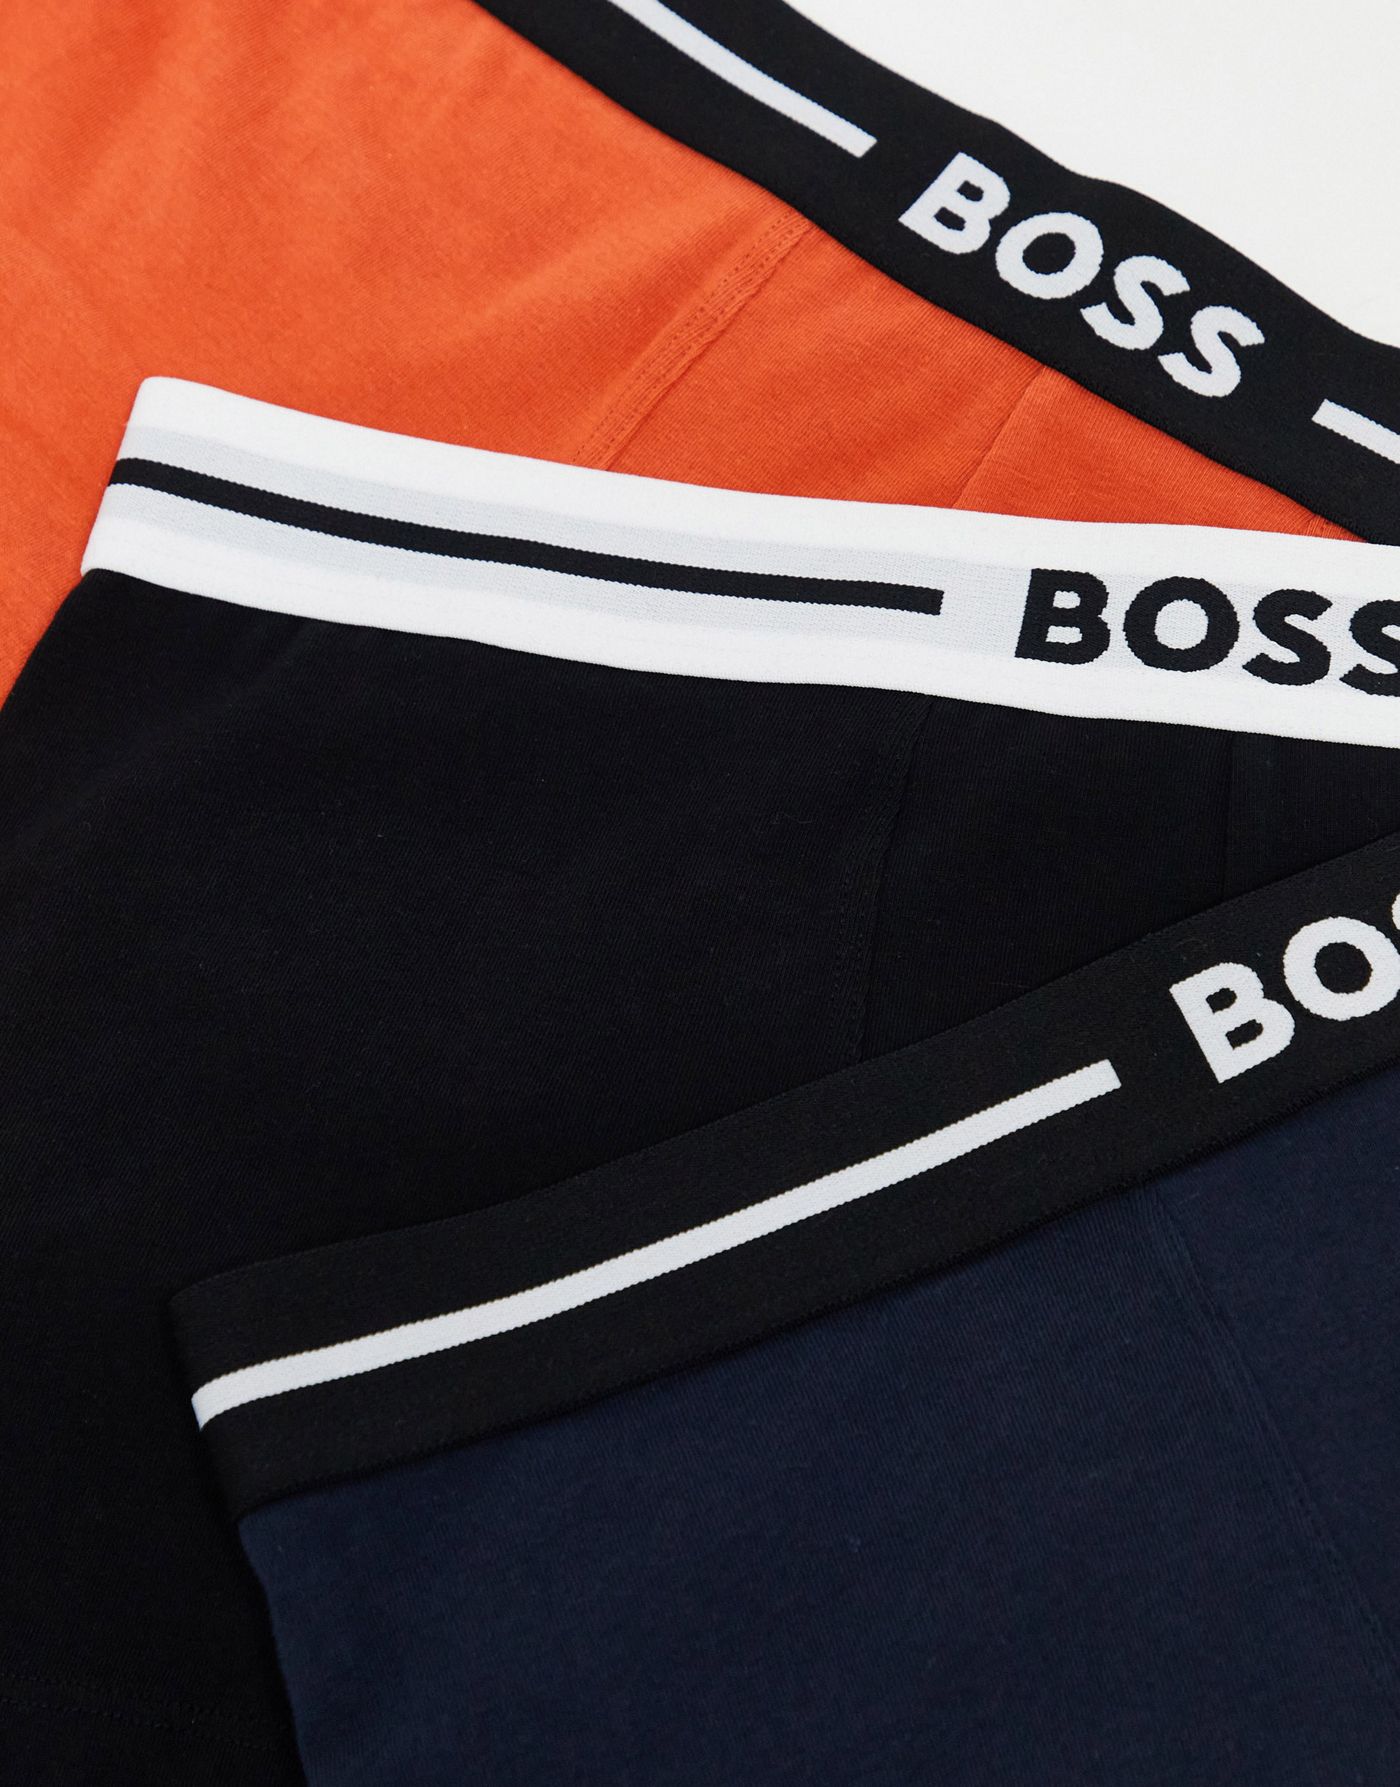 Boss Bodywear bold 3 pack trunks in black and orange 